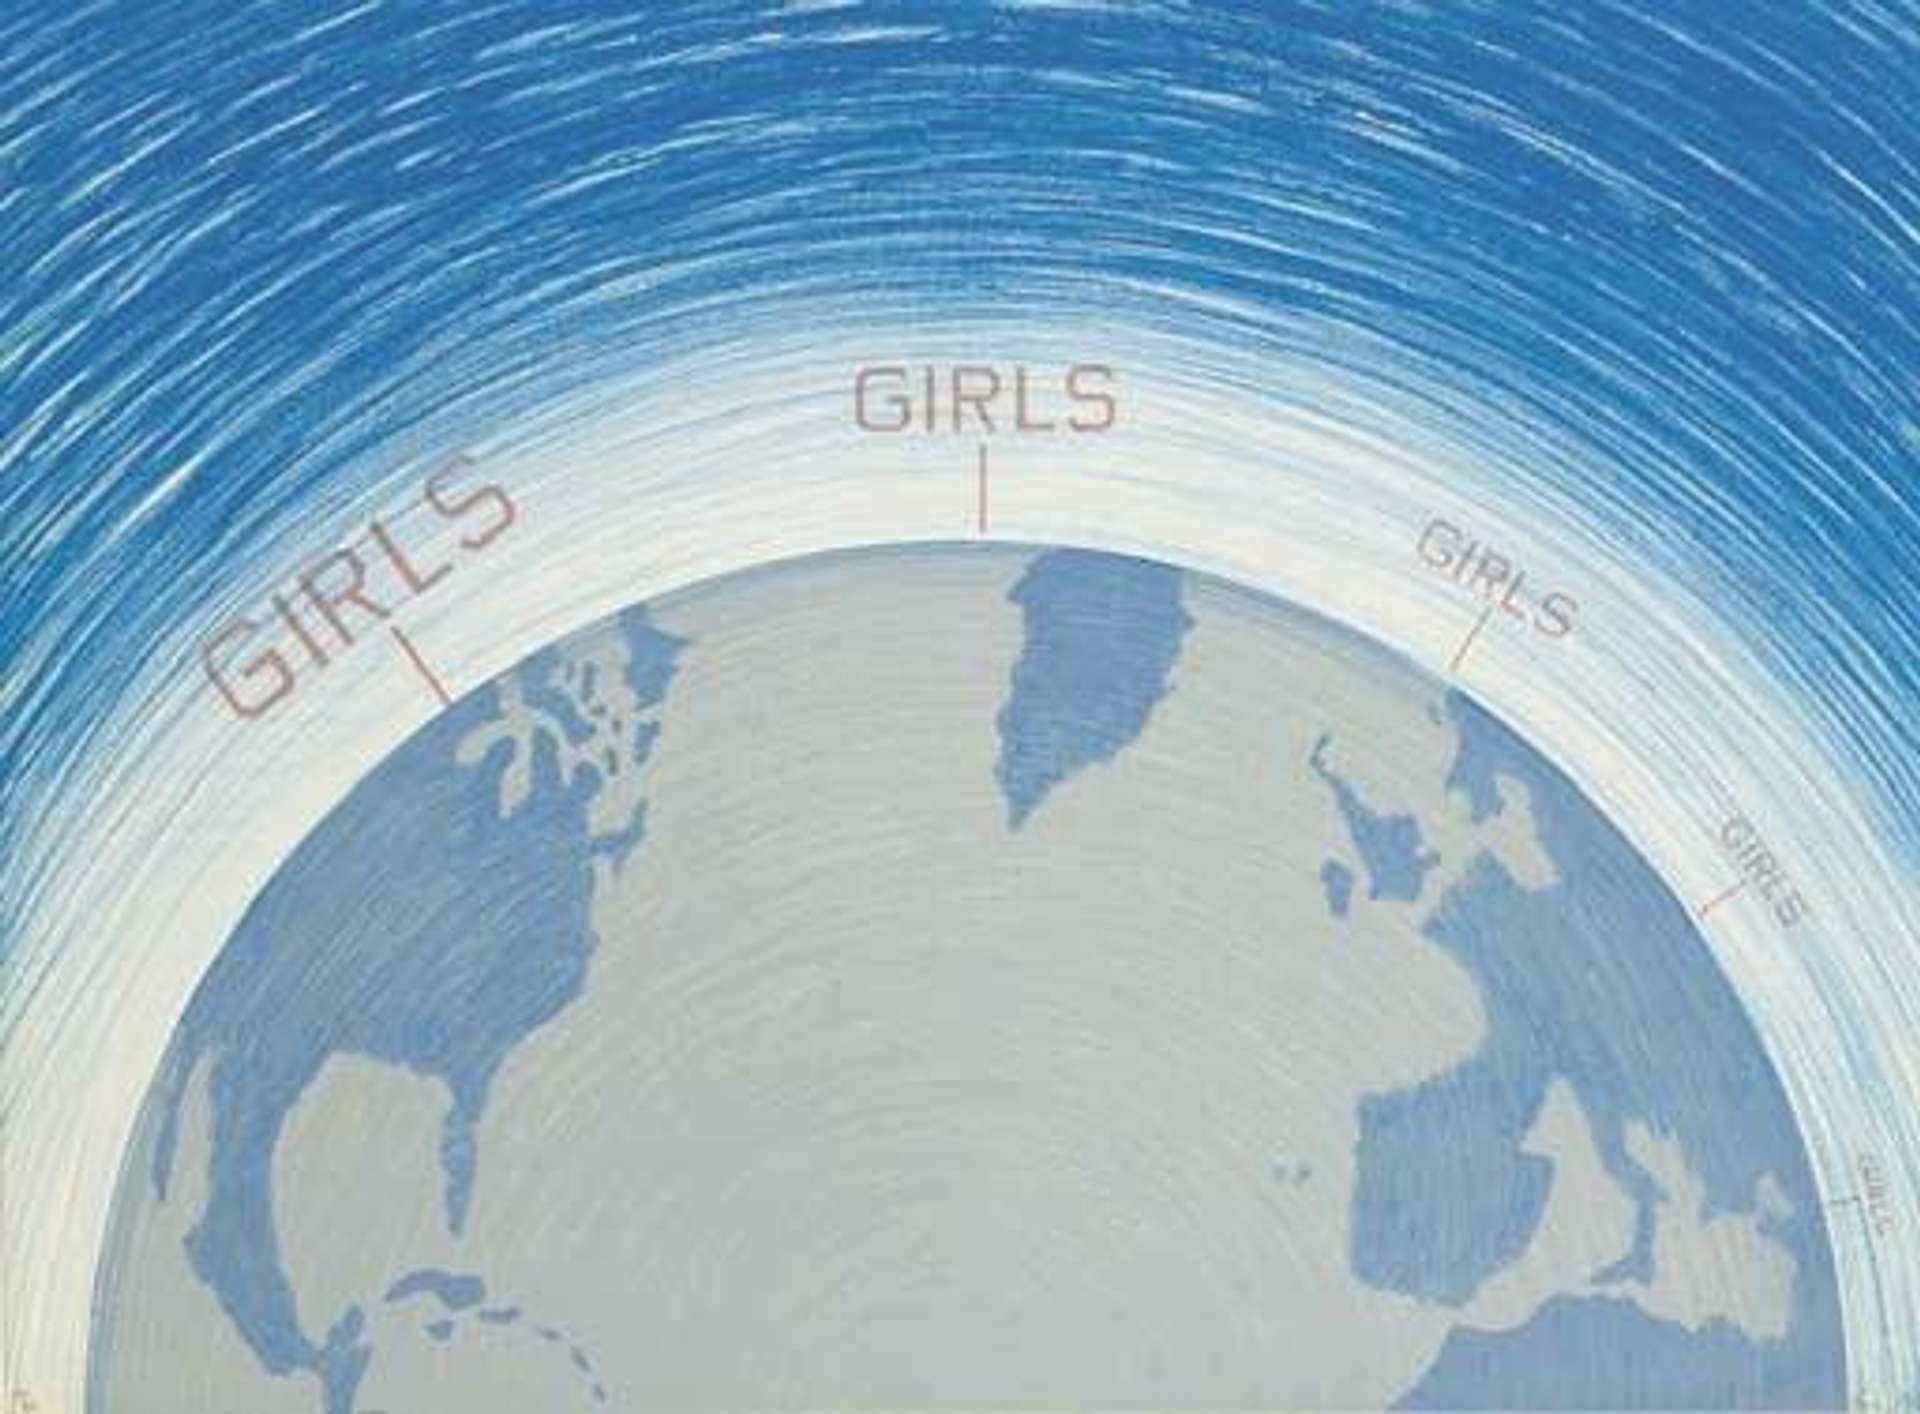 Girls - Signed Print by Ed Ruscha 1982 - MyArtBroker